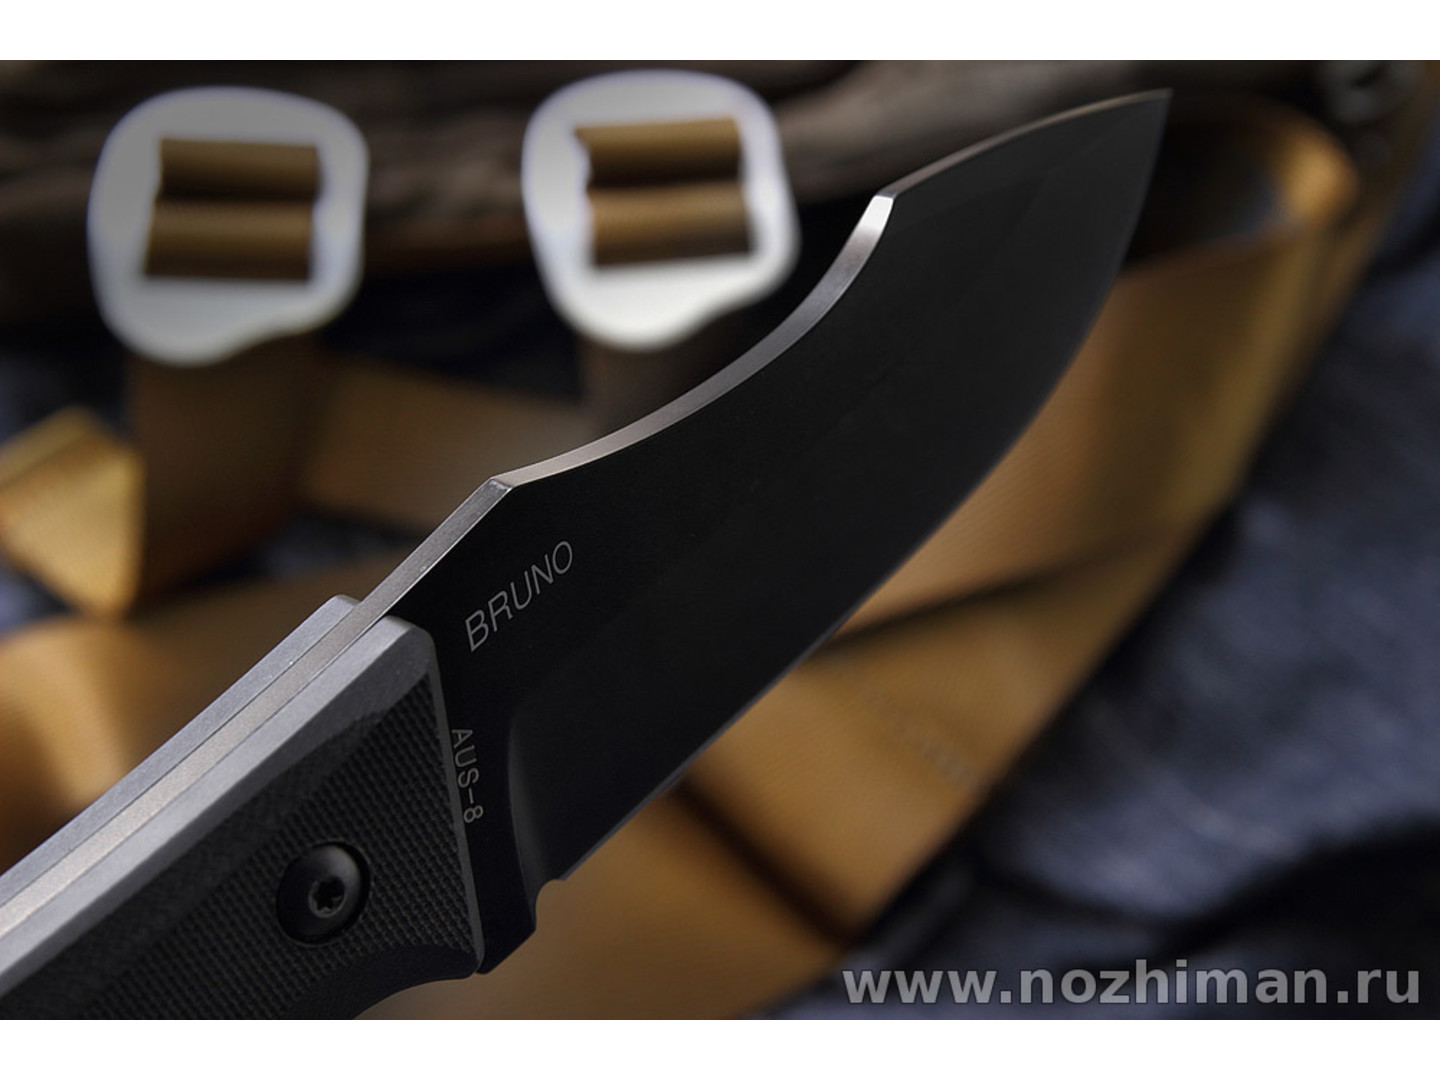 Mr.Blade нож Bruno сталь Aus-8, рукоять G10 black